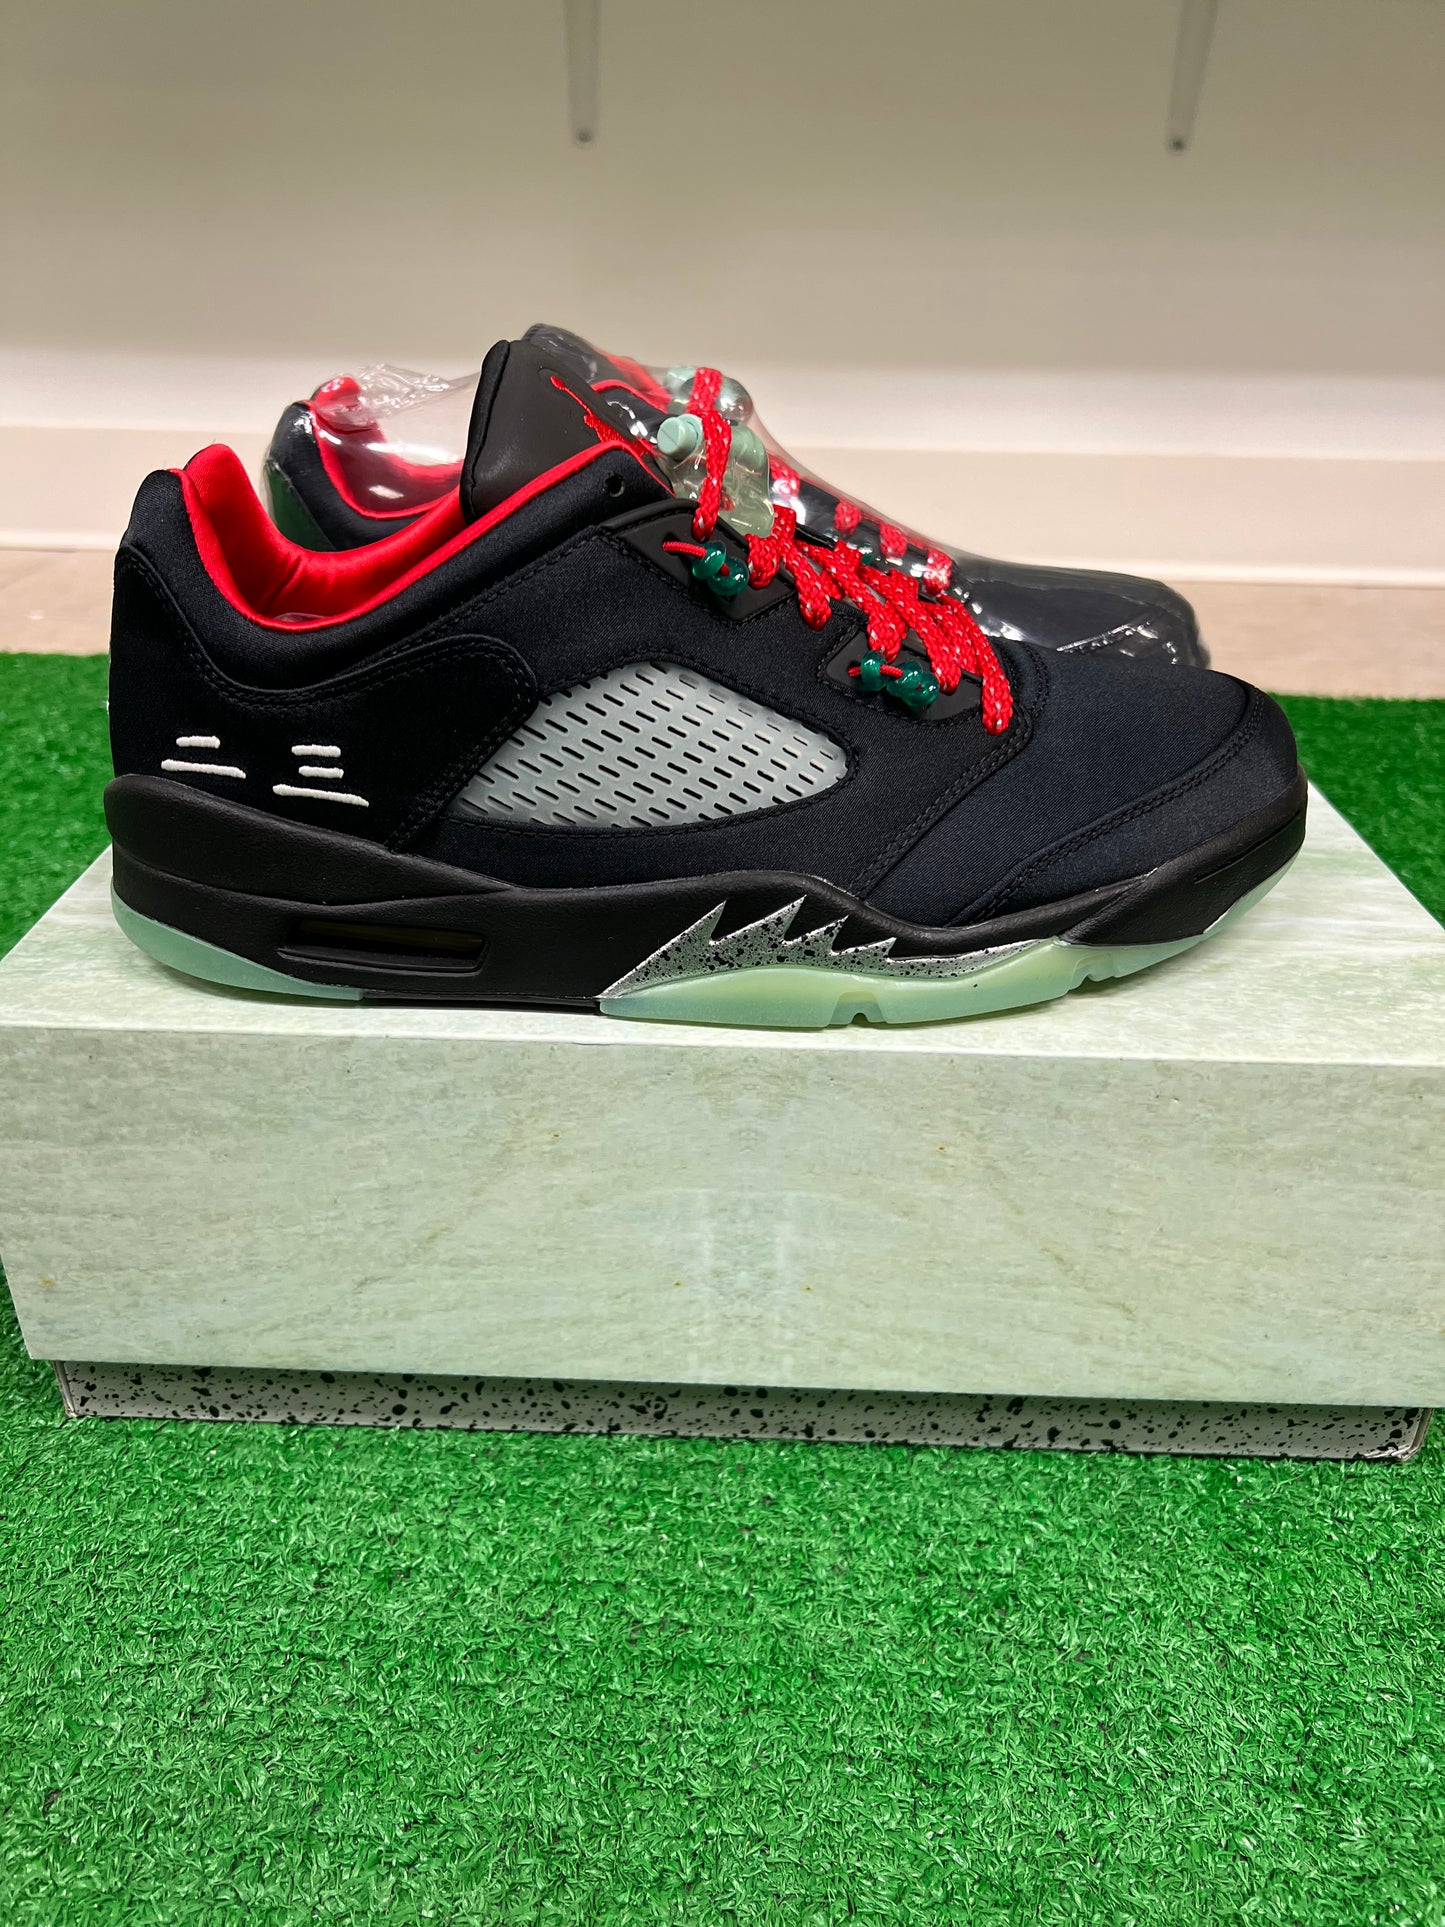 Men’s Air Jordan 5 low retro clot multiple sizes men’s shoe new